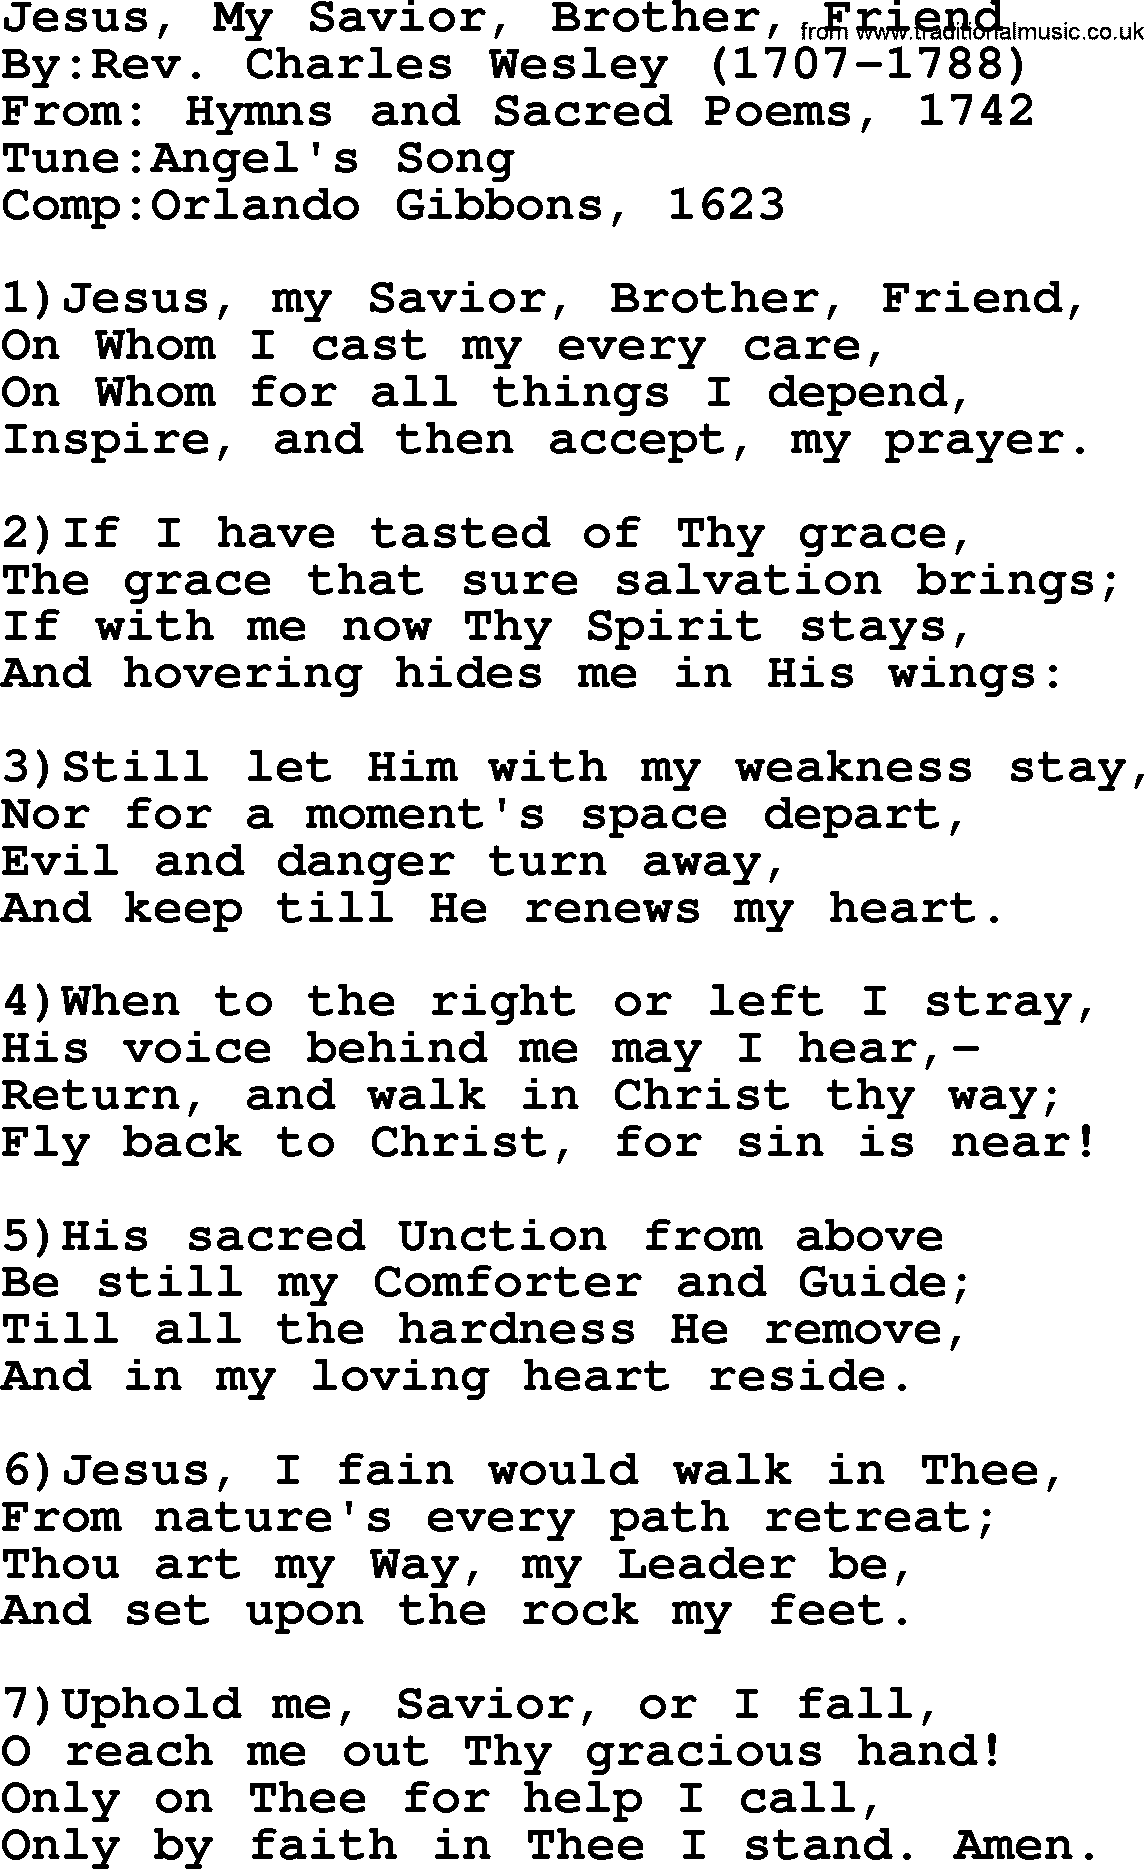 Methodist Hymn: Jesus, My Savior, Brother, Friend, lyrics